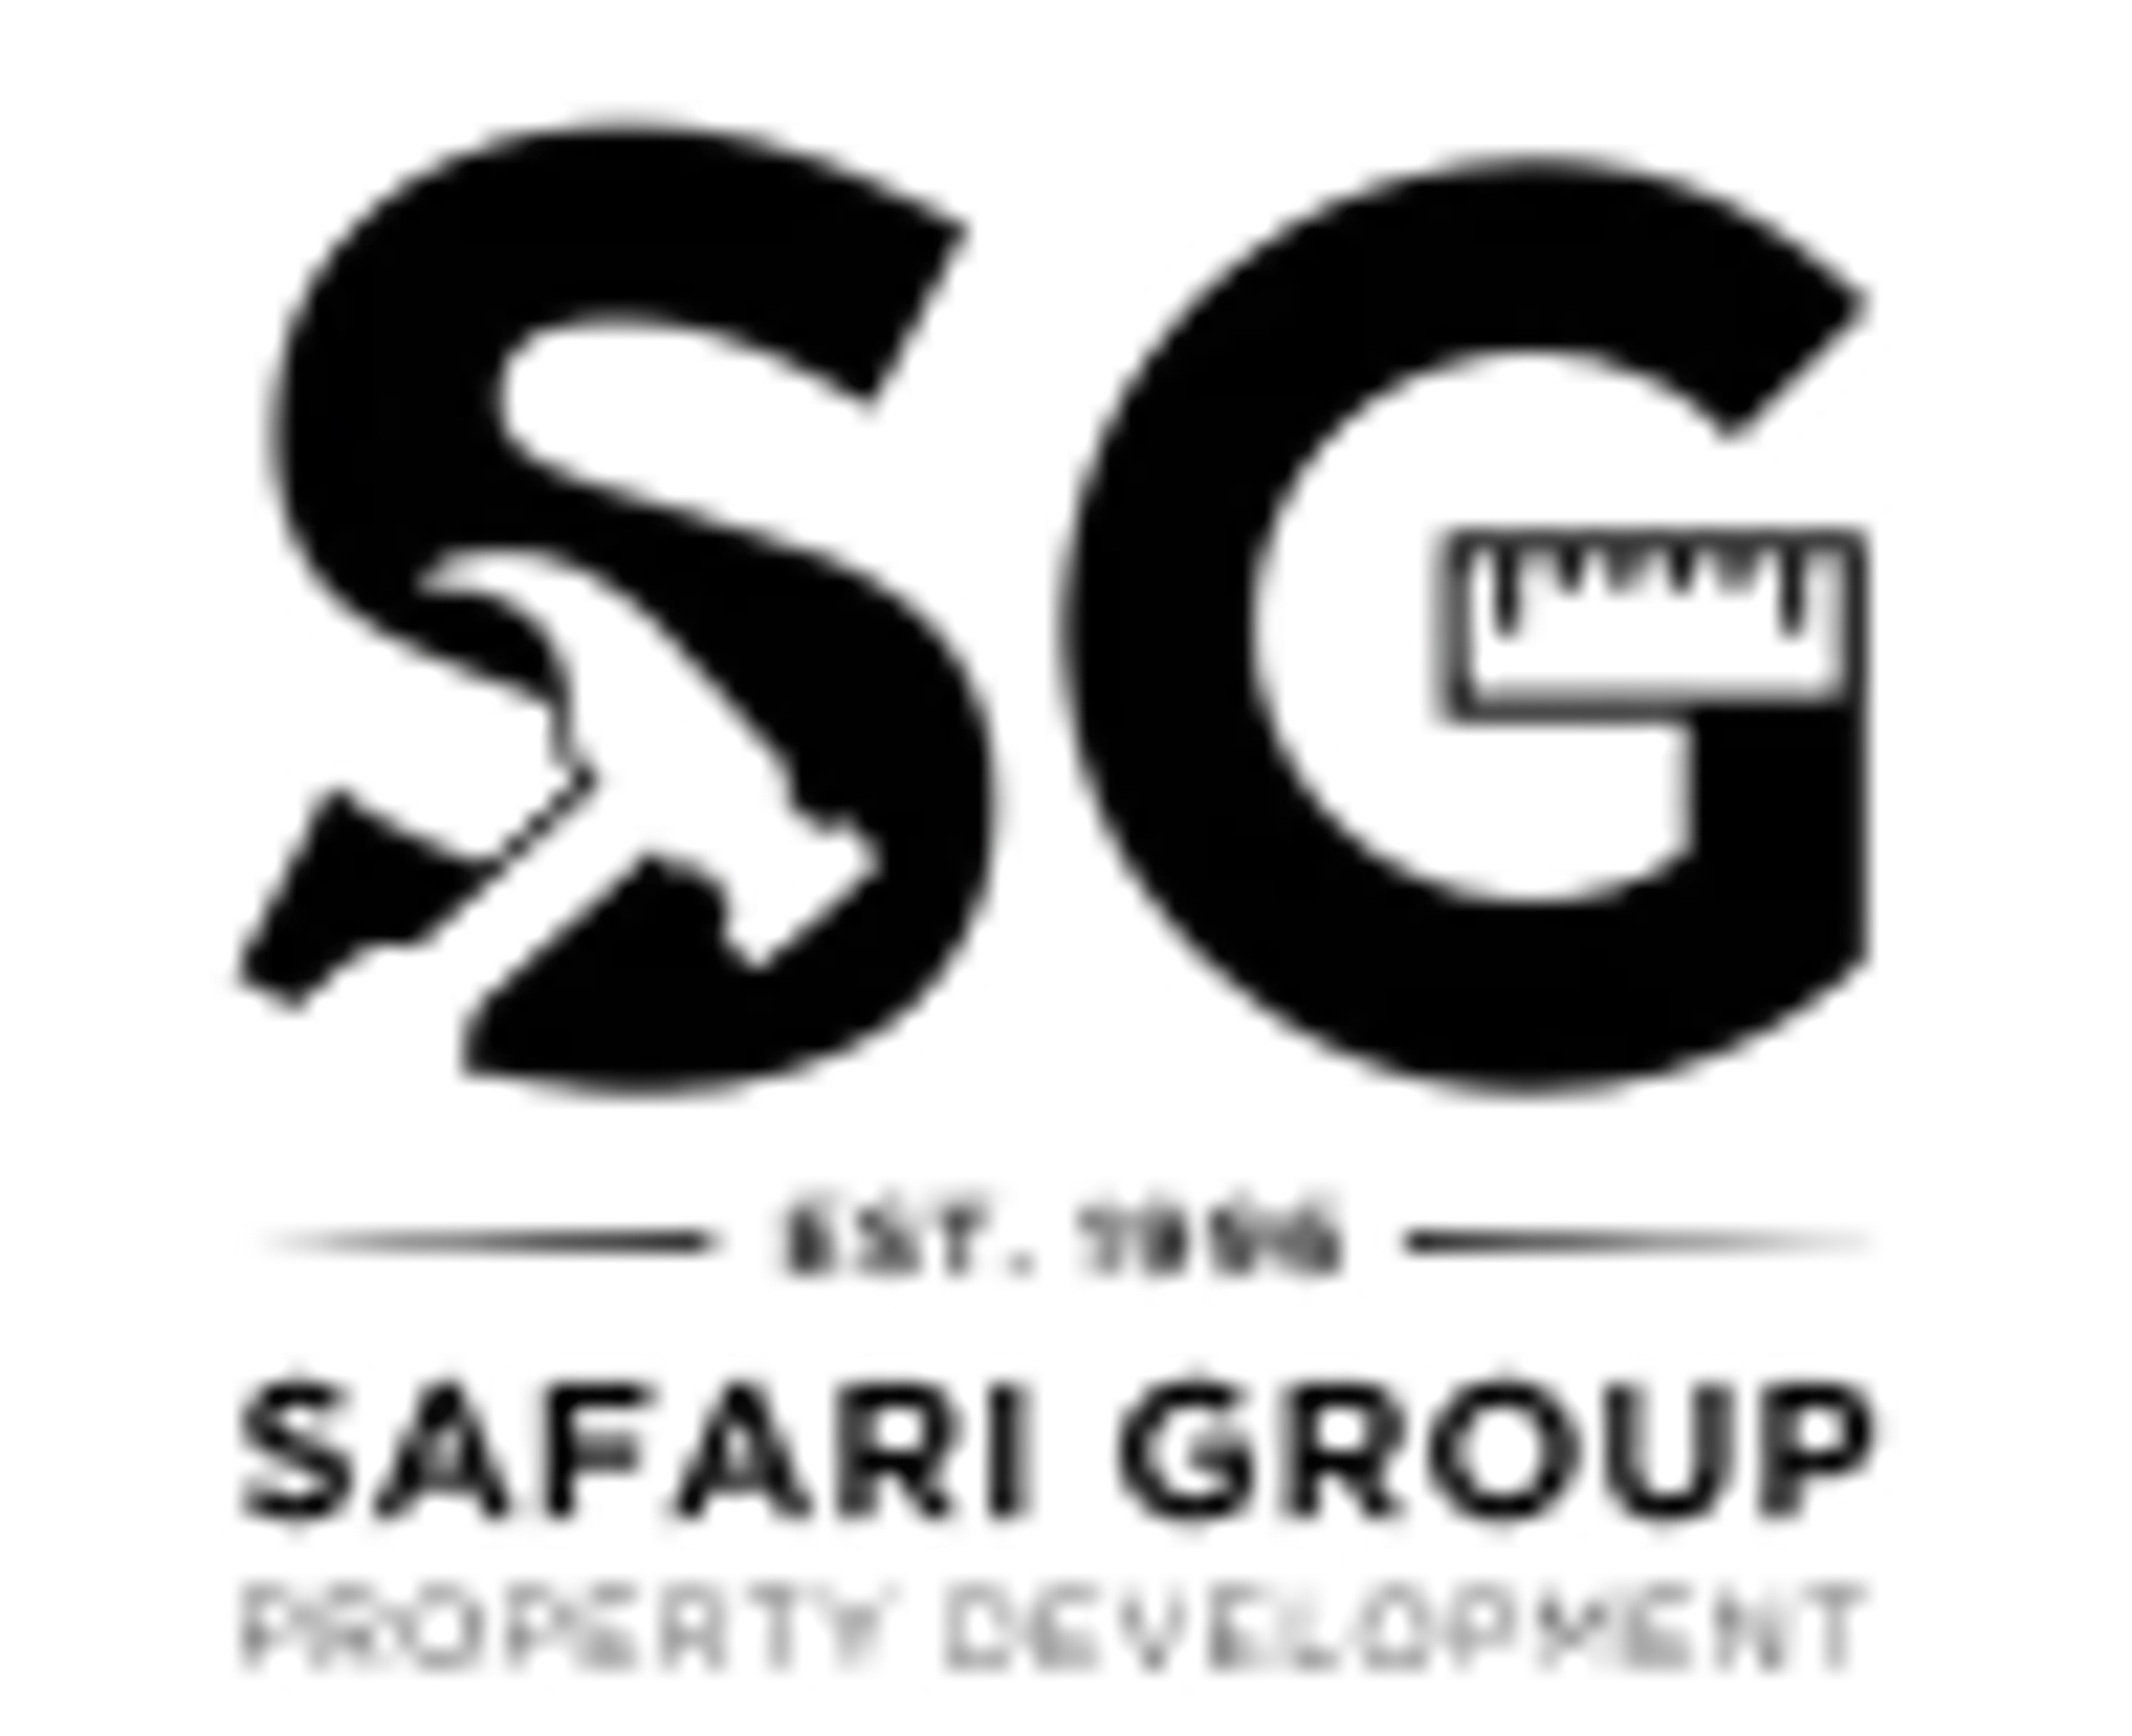 safari logo